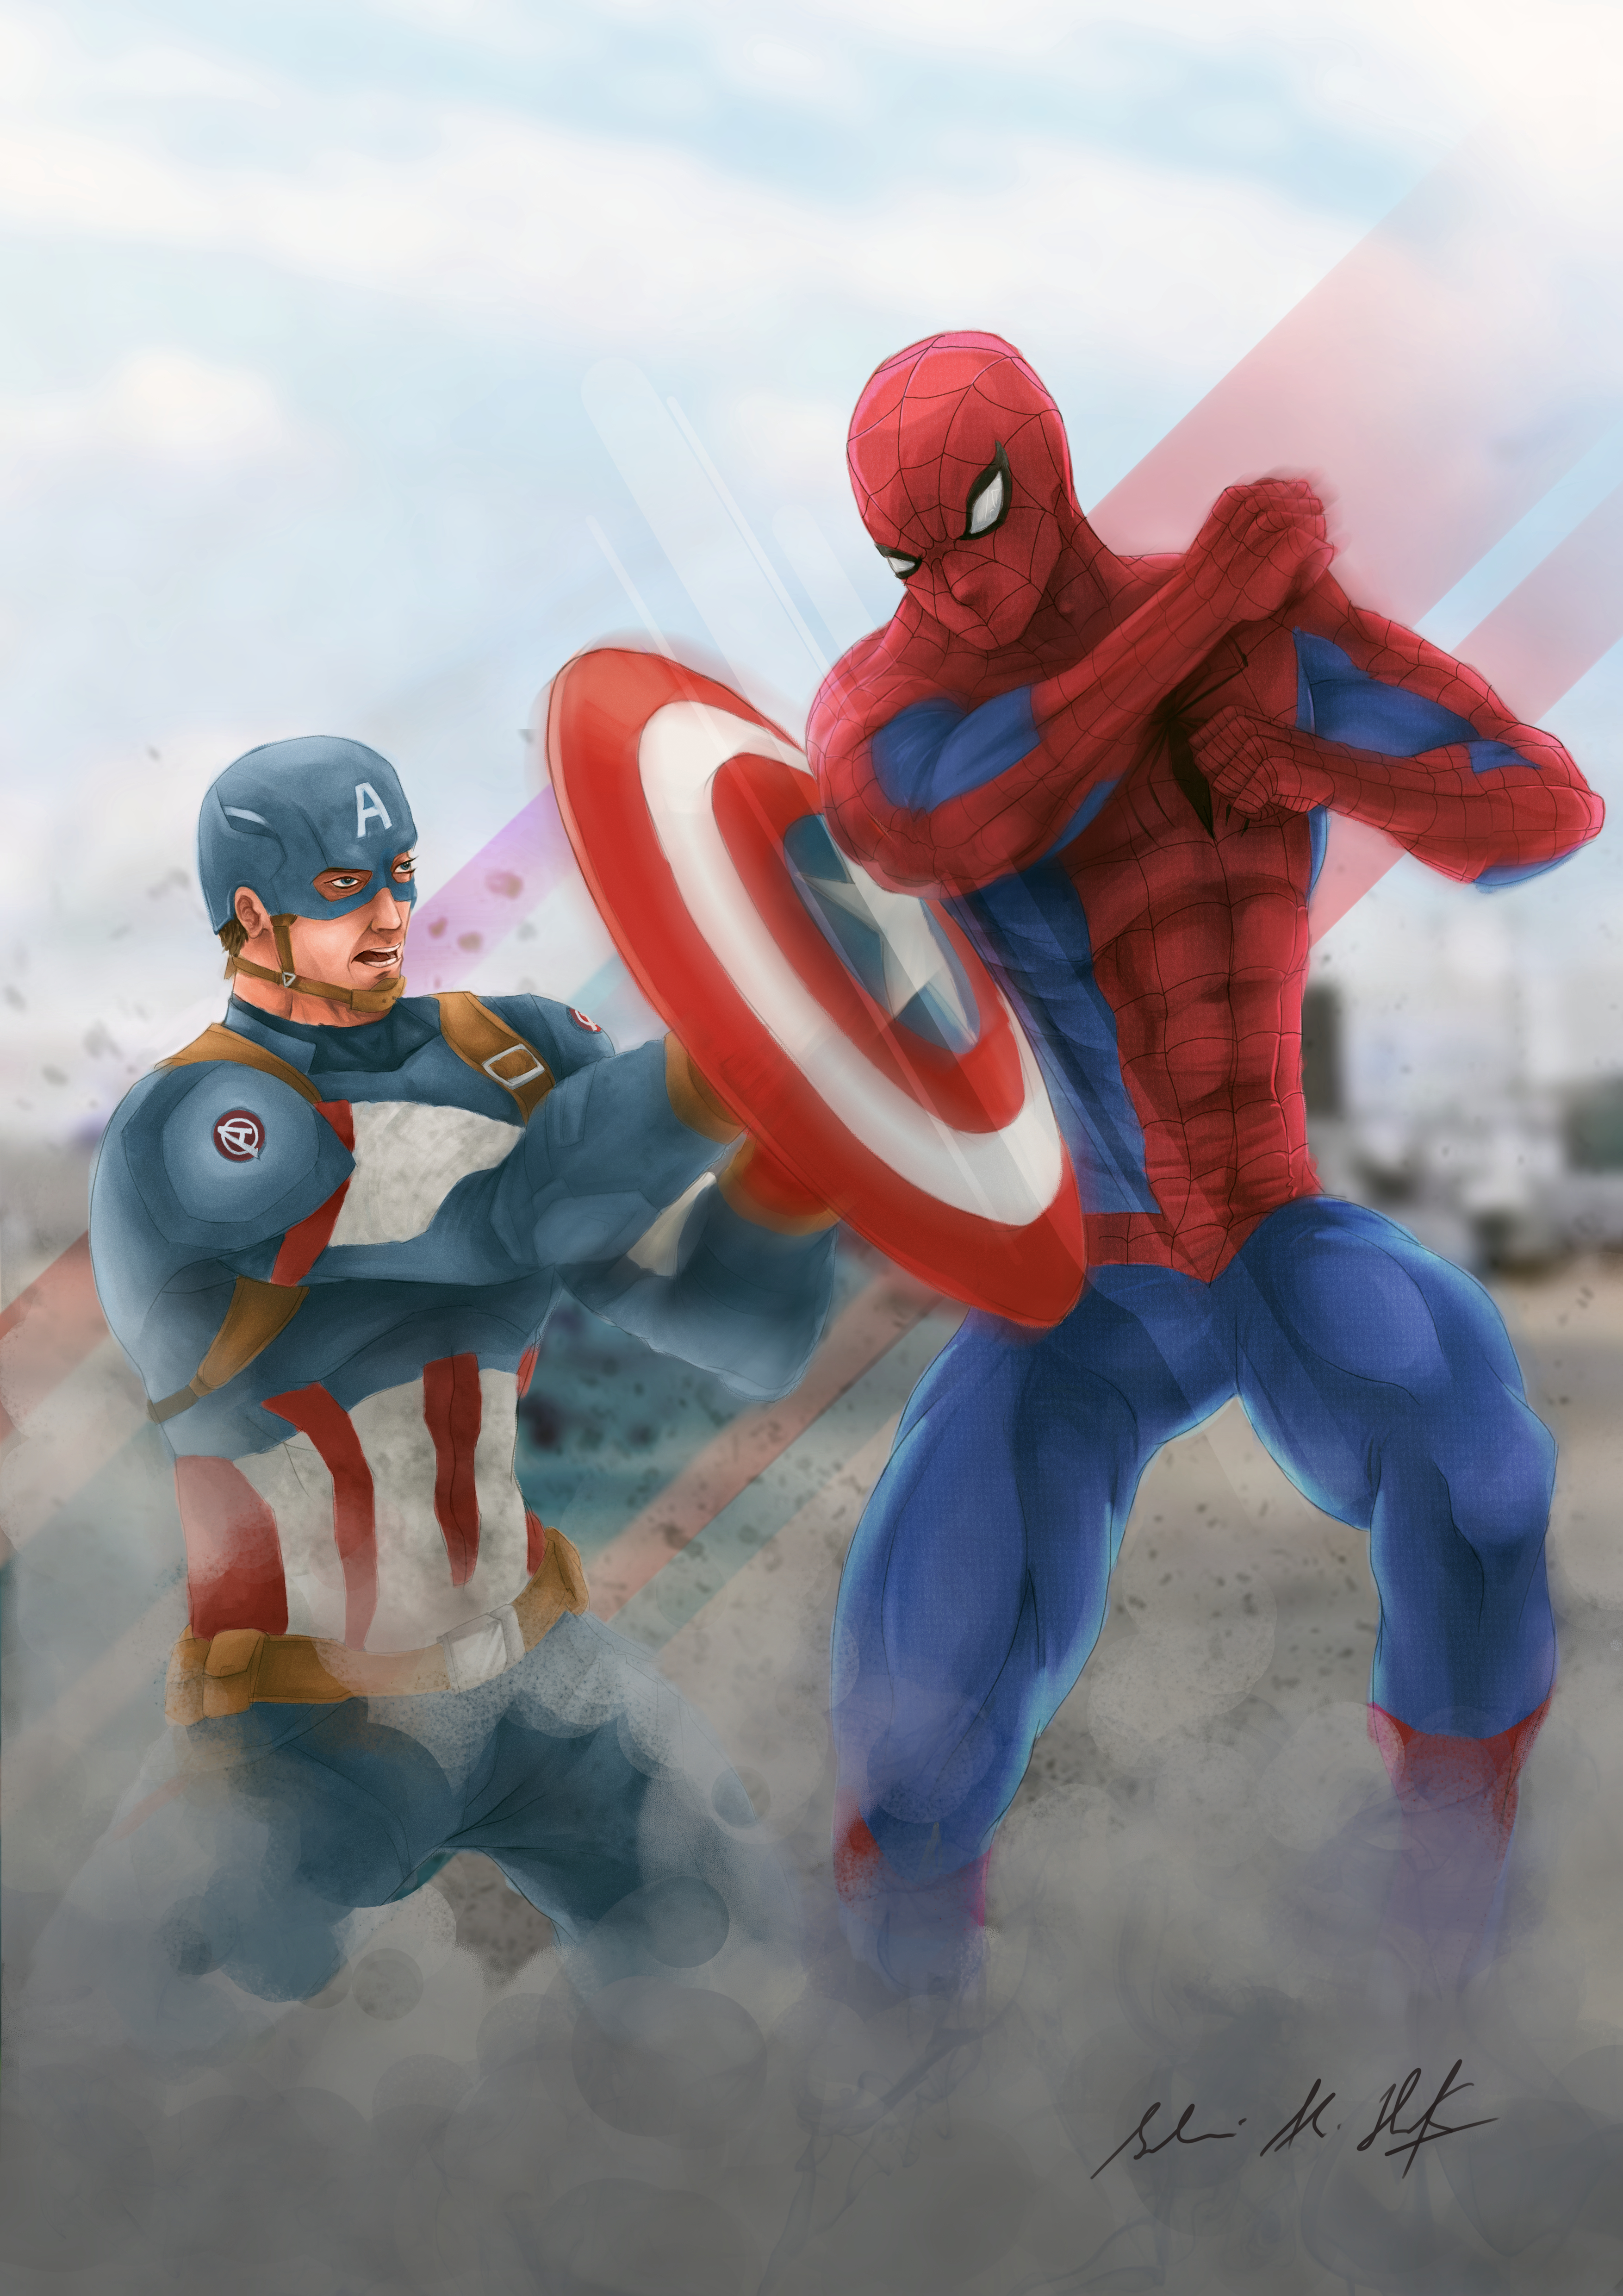 Spiderman V Captain America Civil War by suleiman19 on DeviantArt